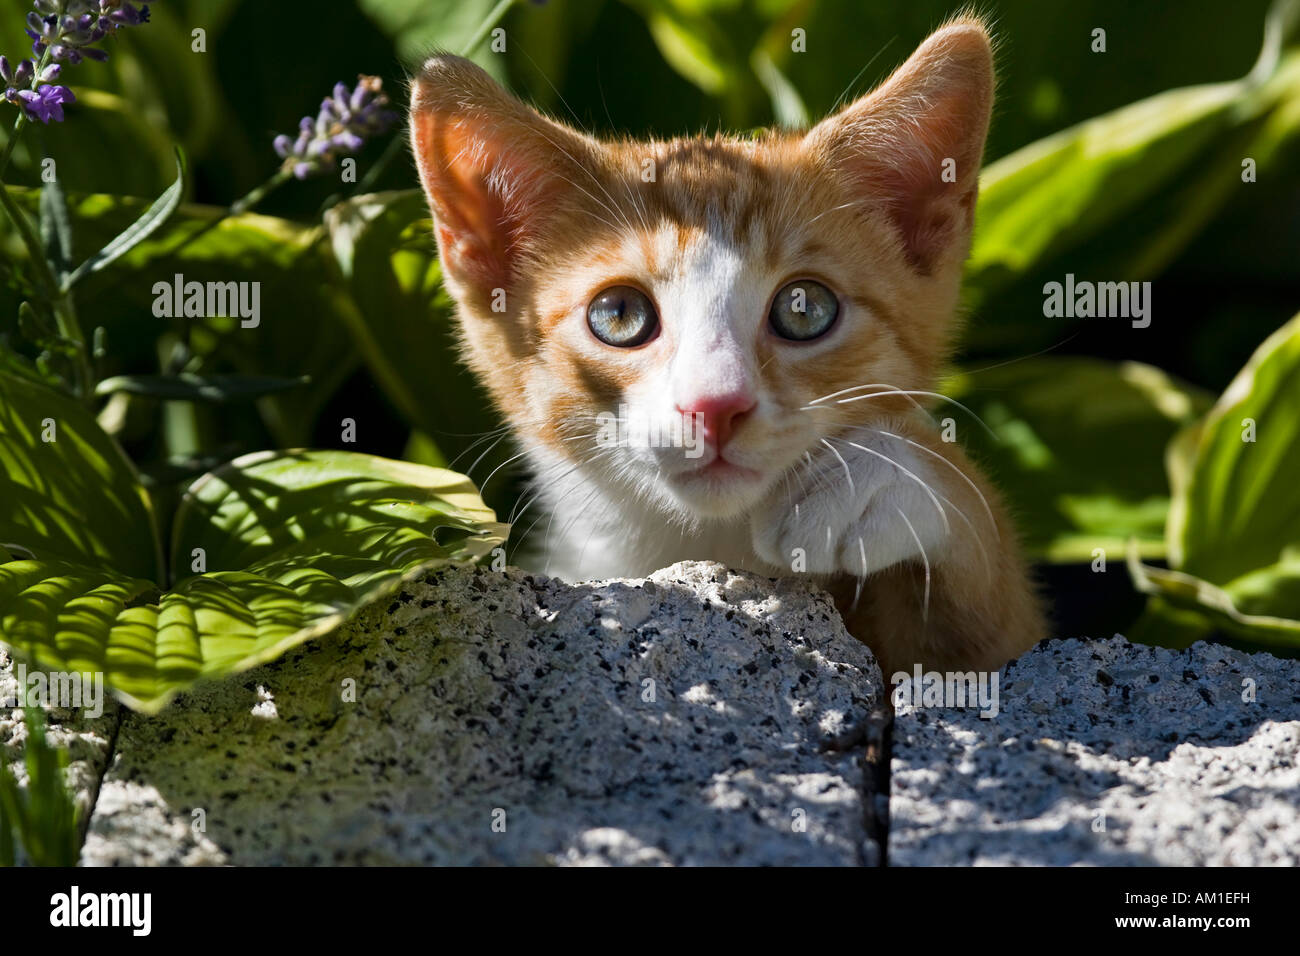 European shorthair cat between plants Stock Photo